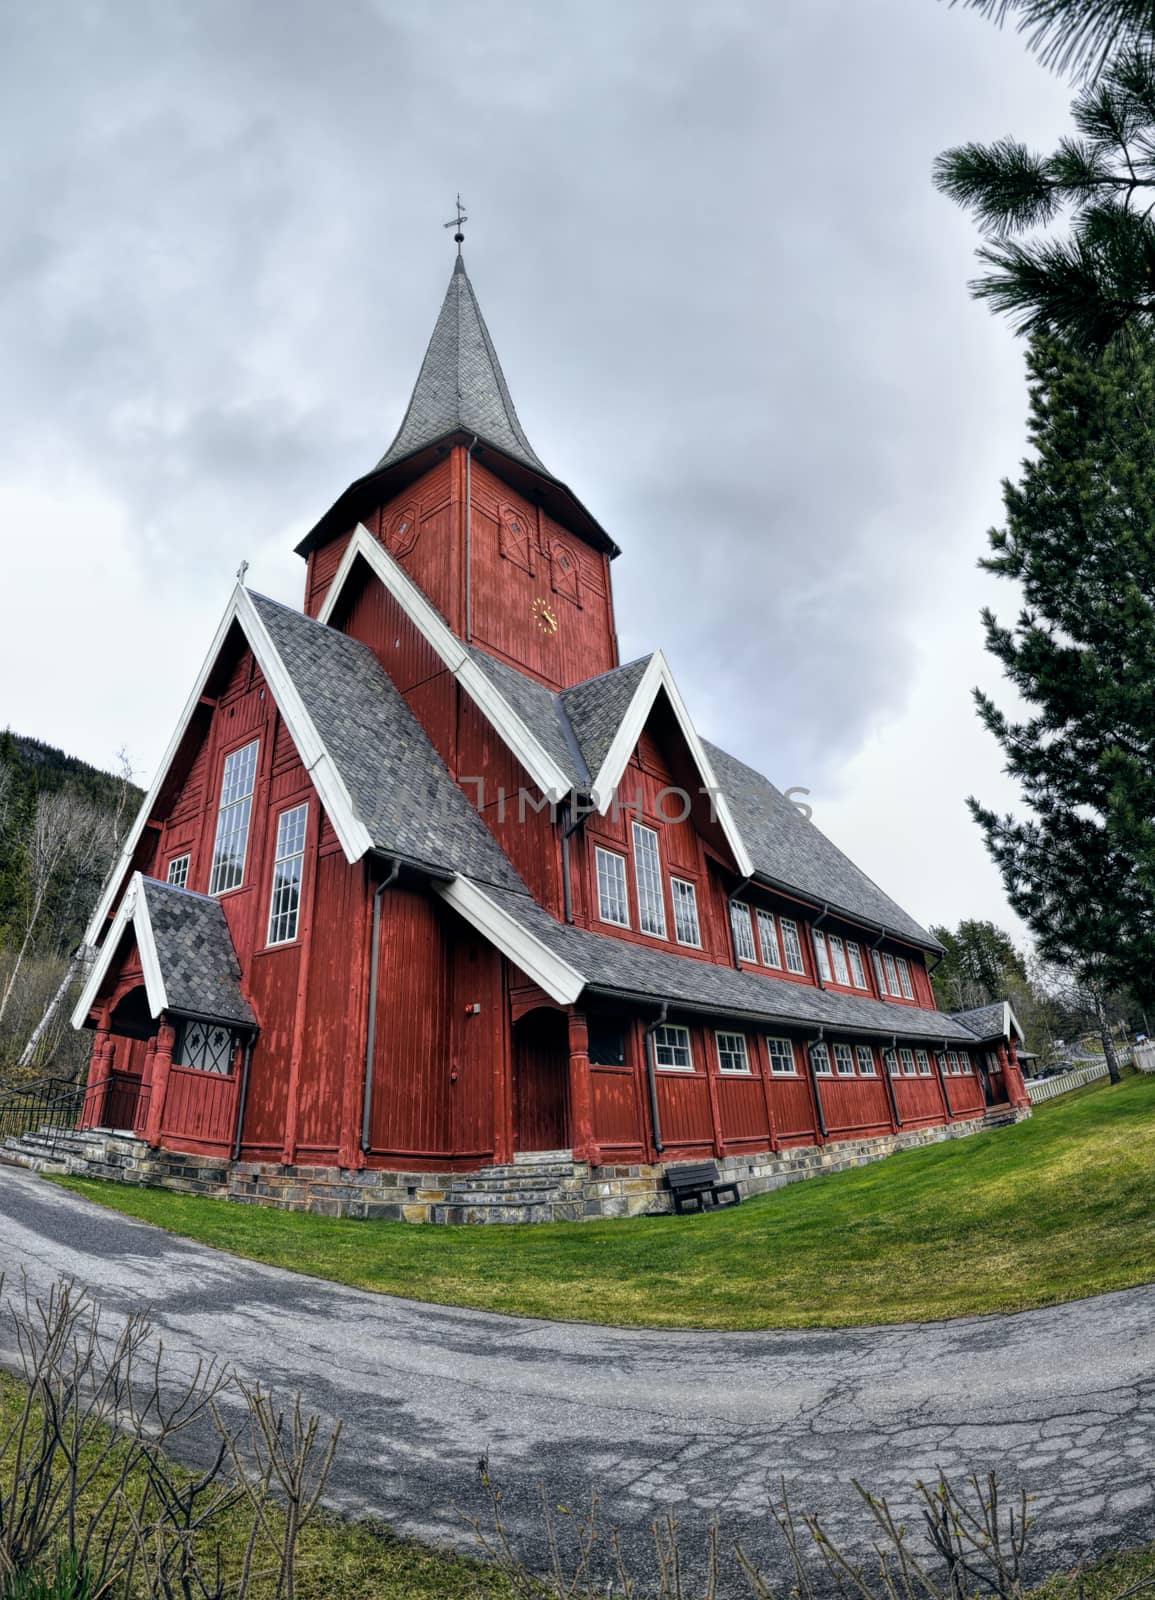 Hol church by MichalKnitl